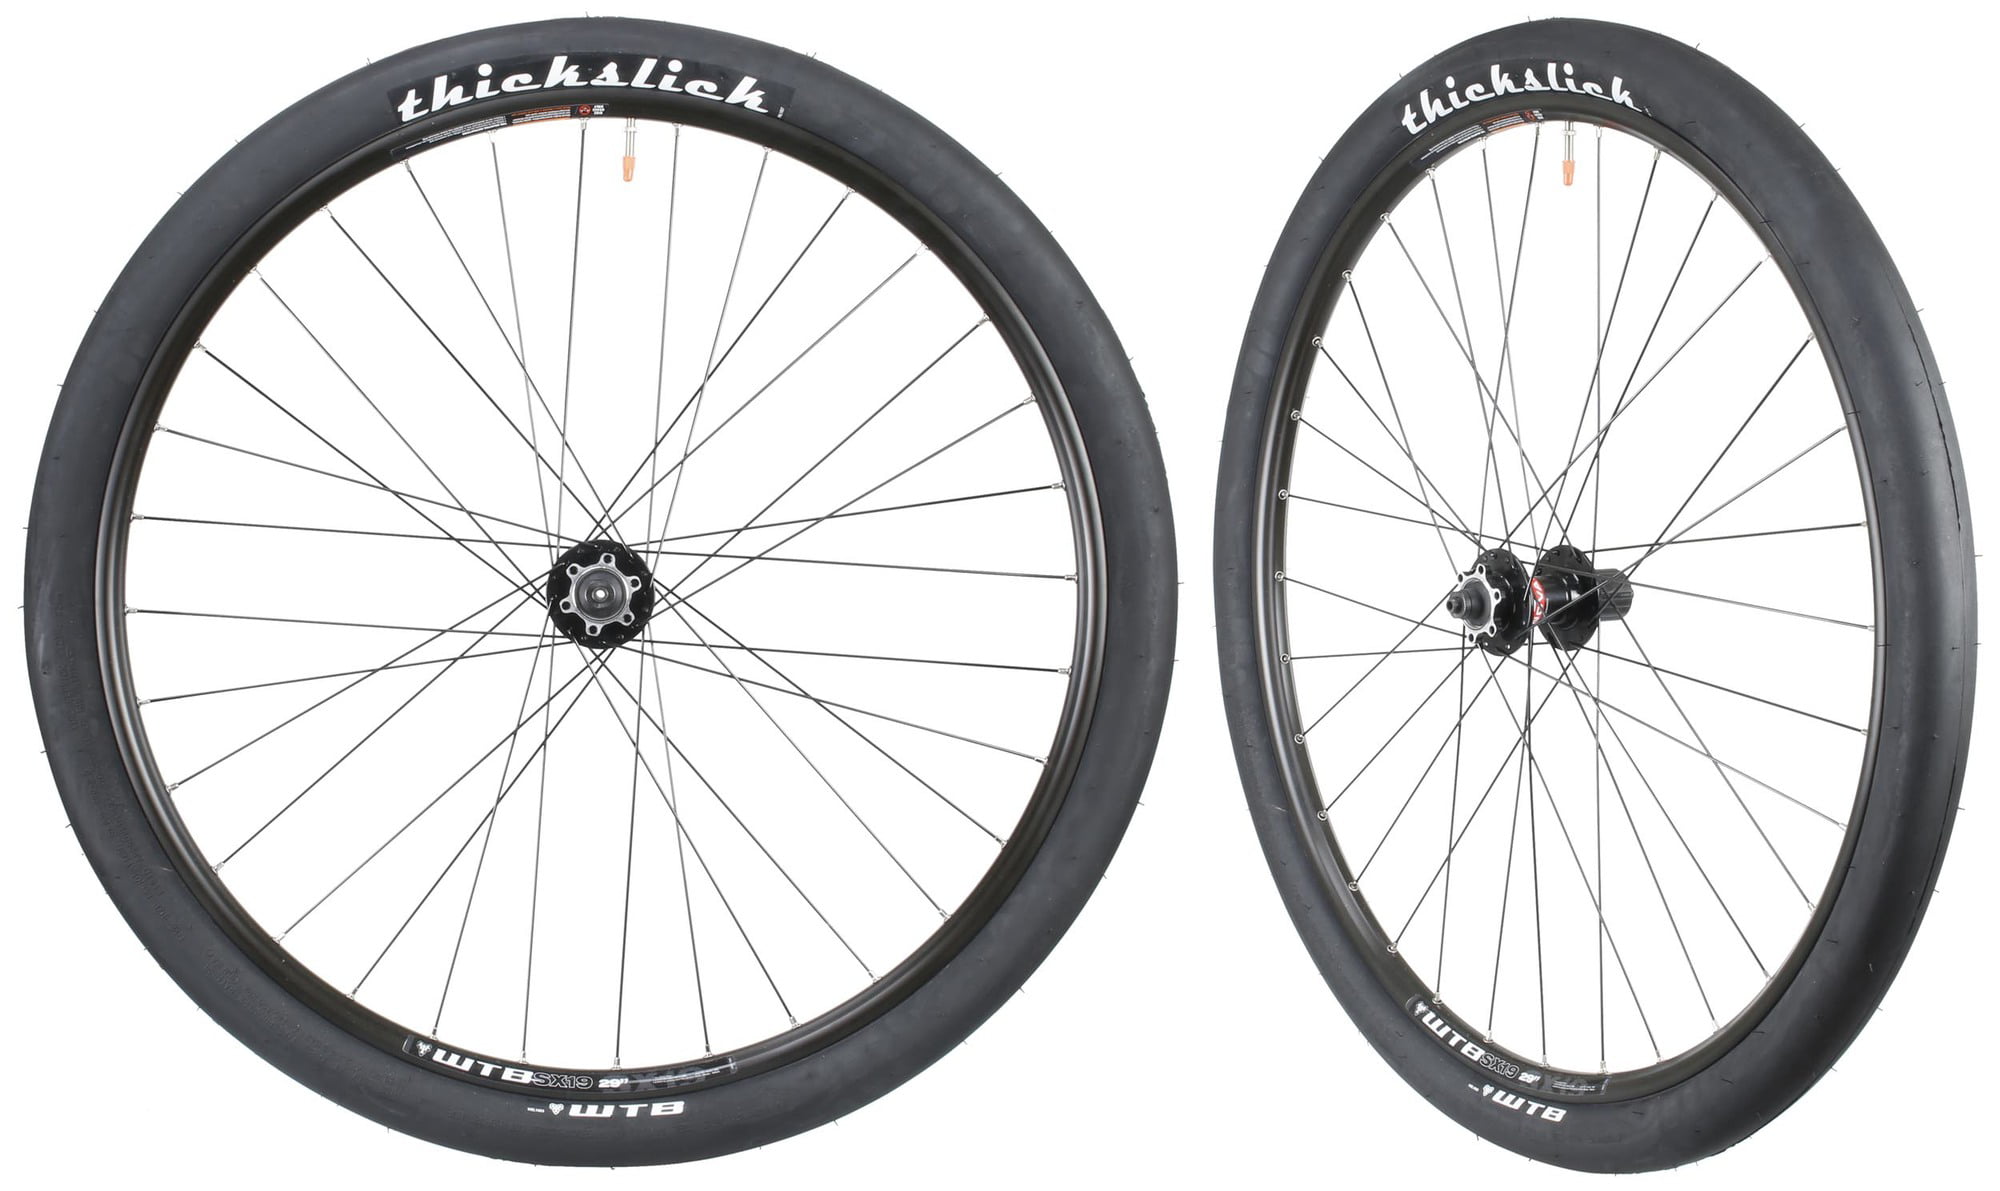 slick mountain bike tyres 29